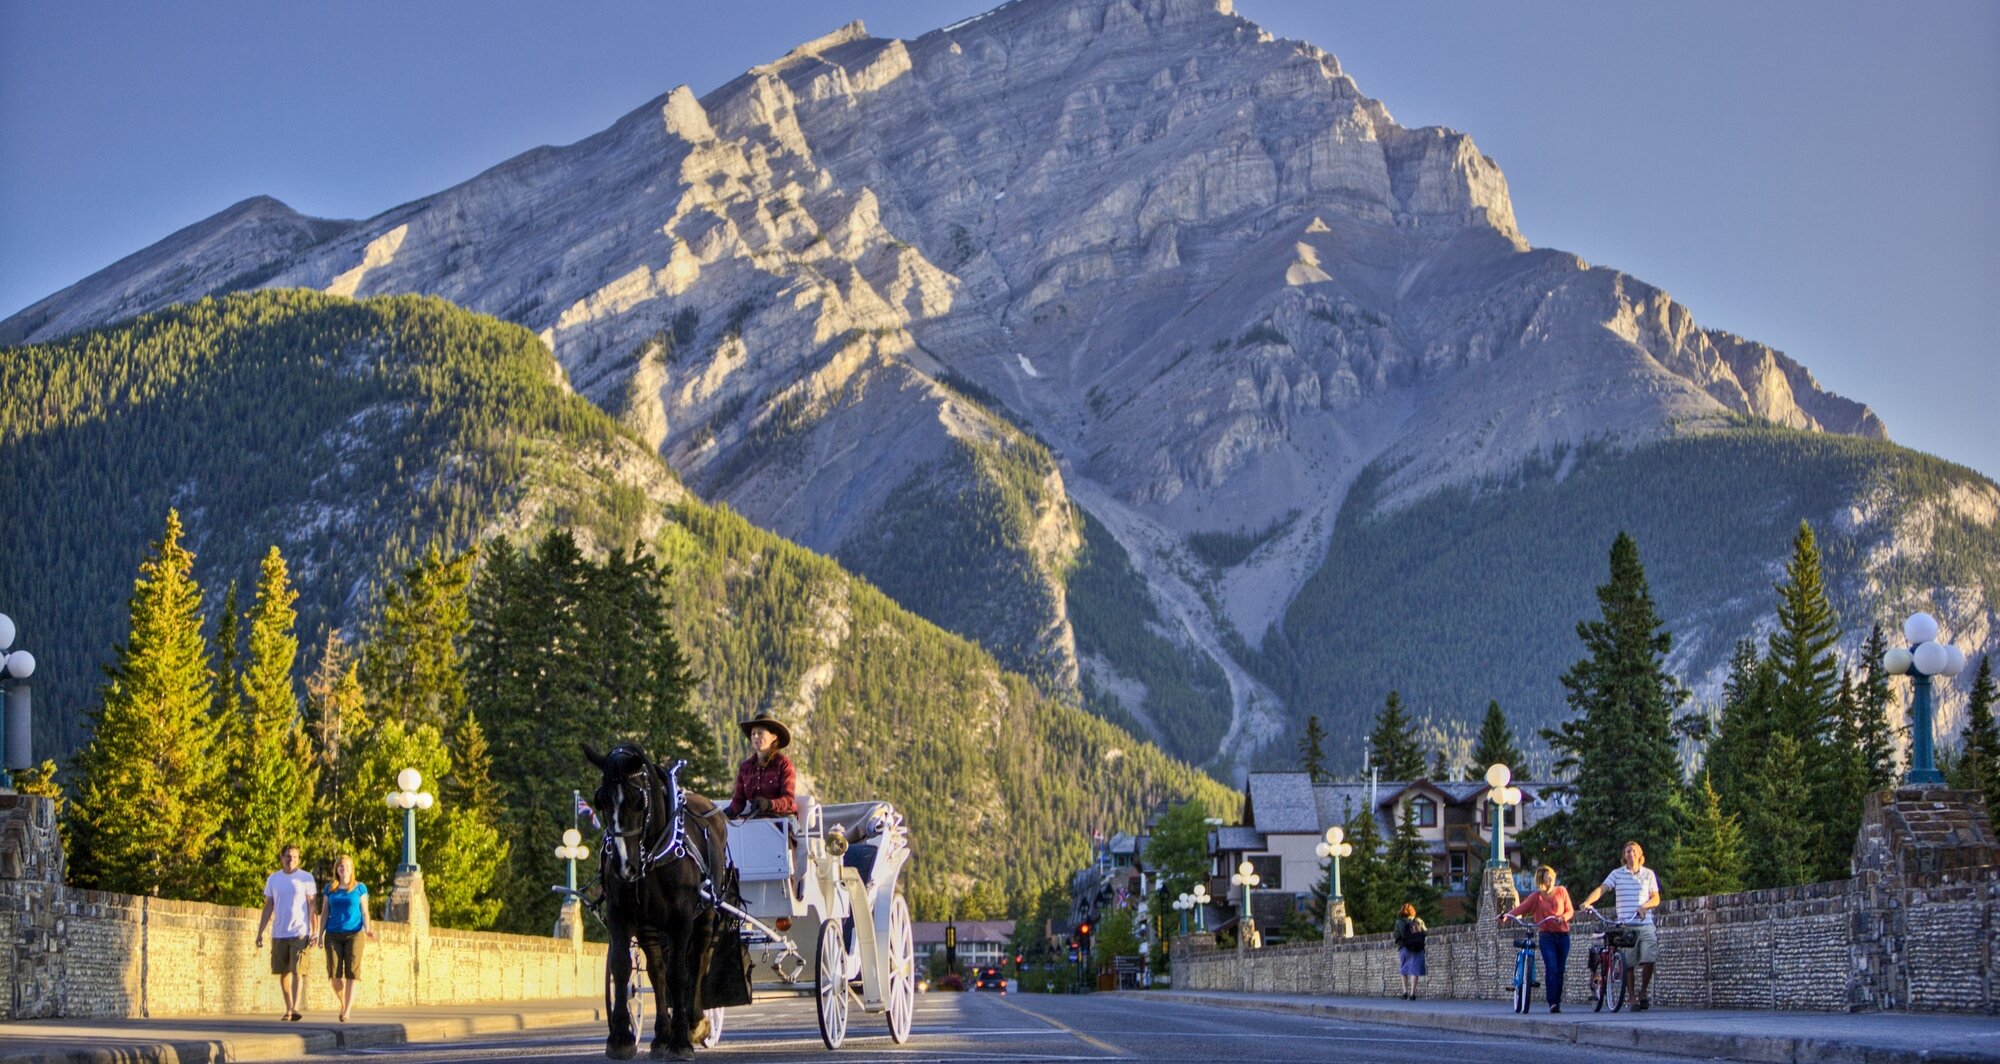 A view of Cascade Mountain on Banff Avenue